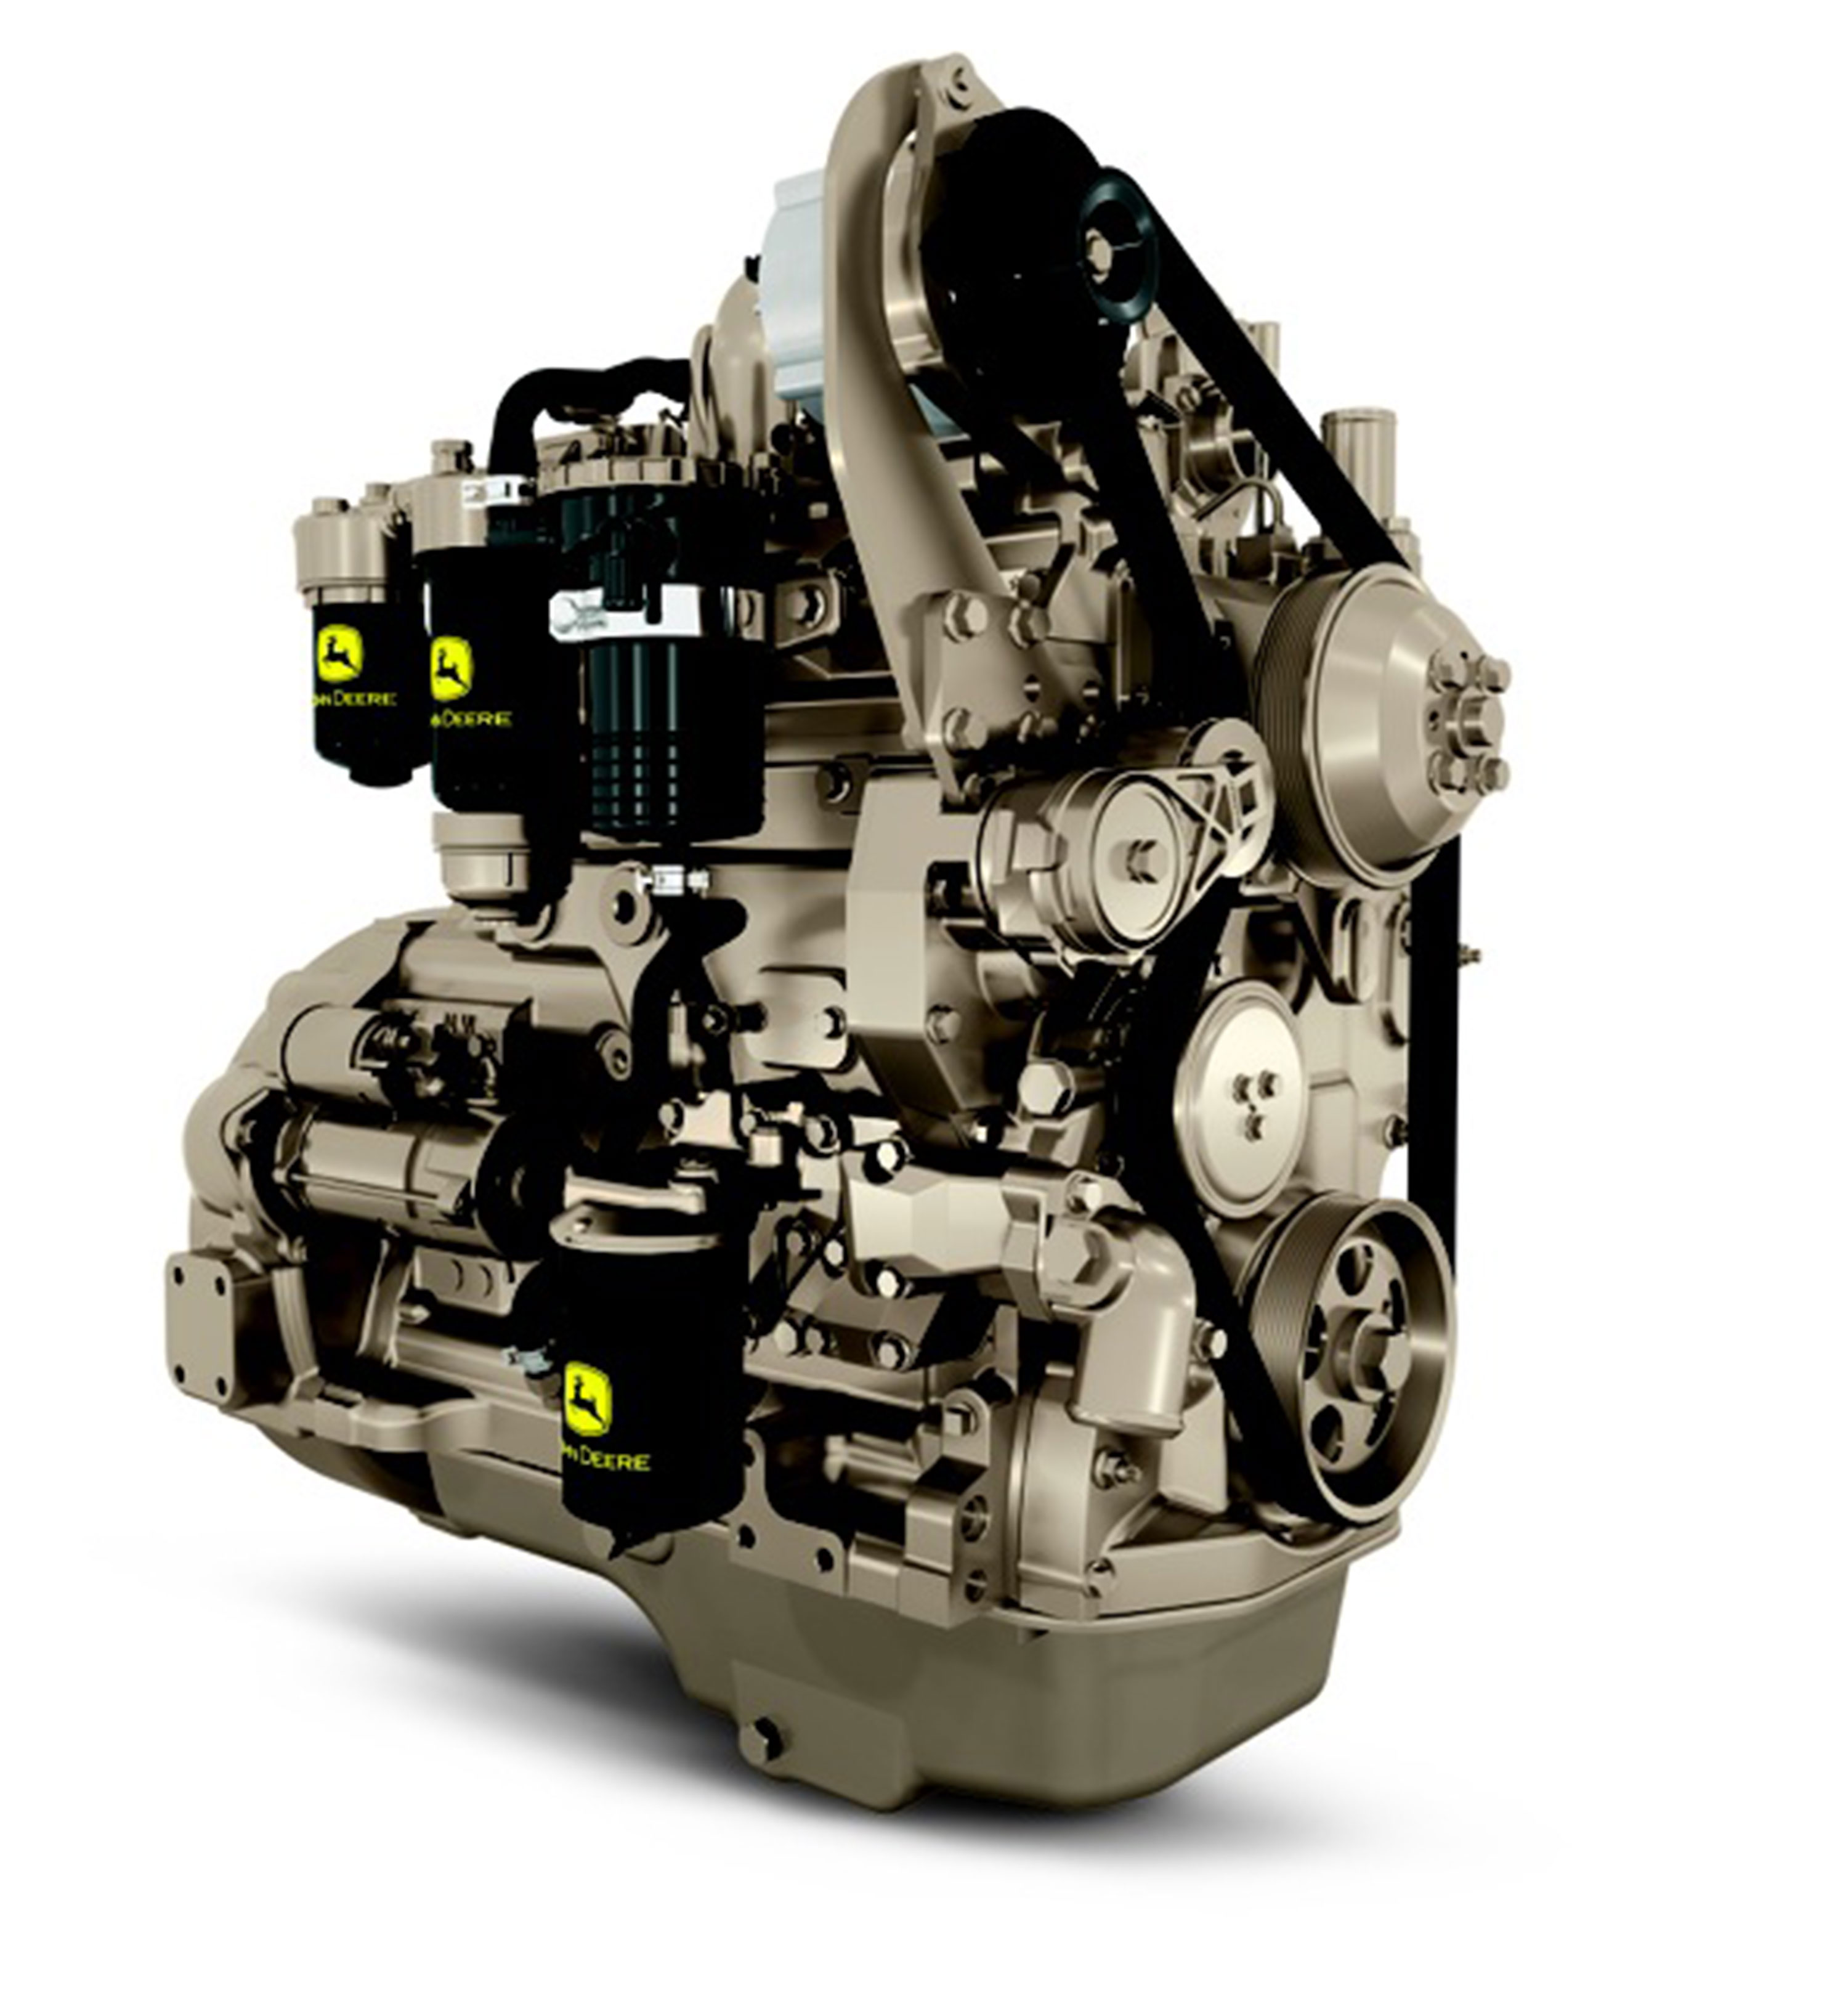 The PowerTech EWX 4.5L industrial diesel engine is 55 kW (74 hp).